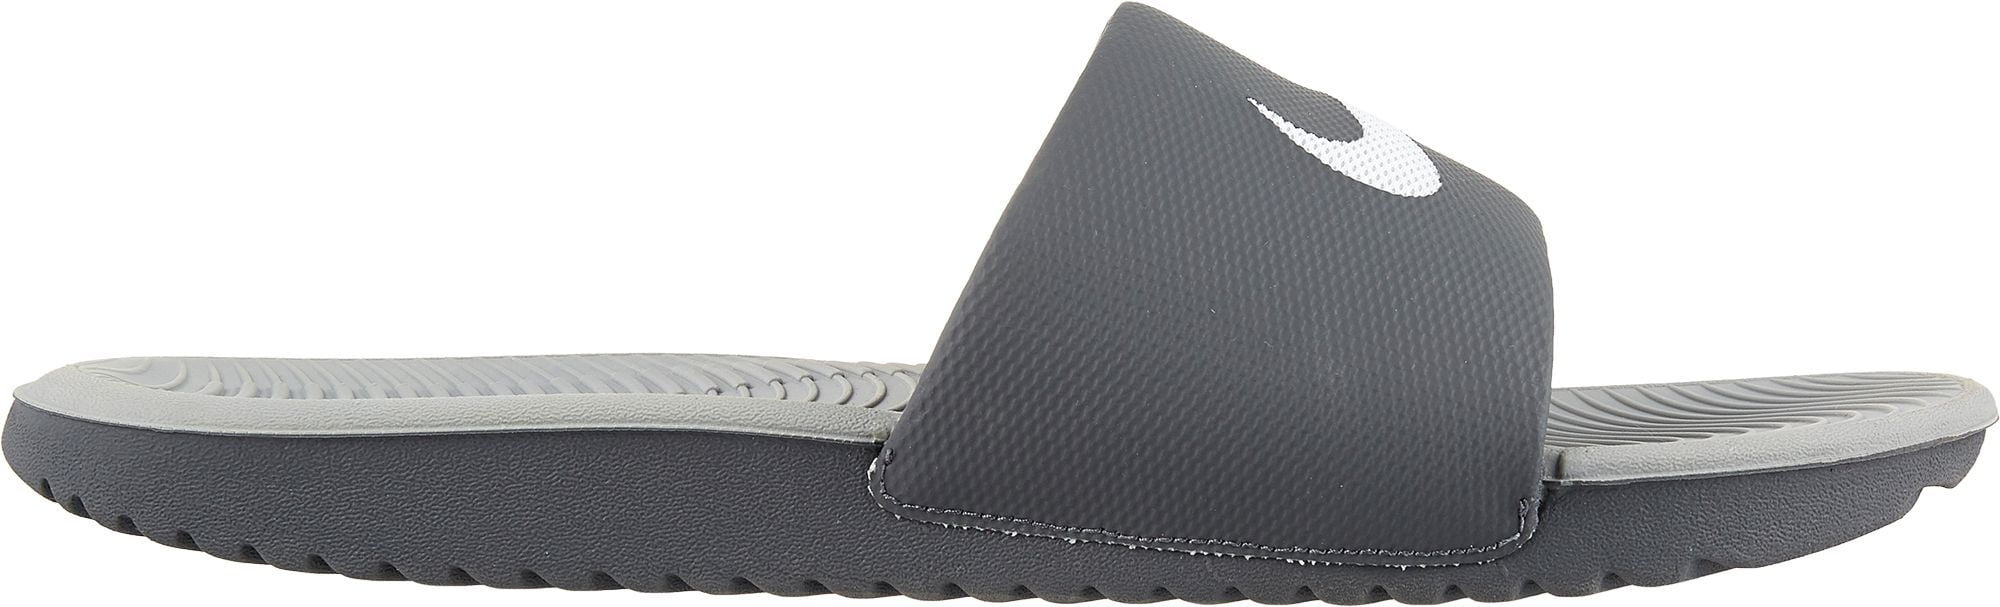 FZ Merchandise - Nike Men's Kawa Slides, Grey/White, Medium 10 ...